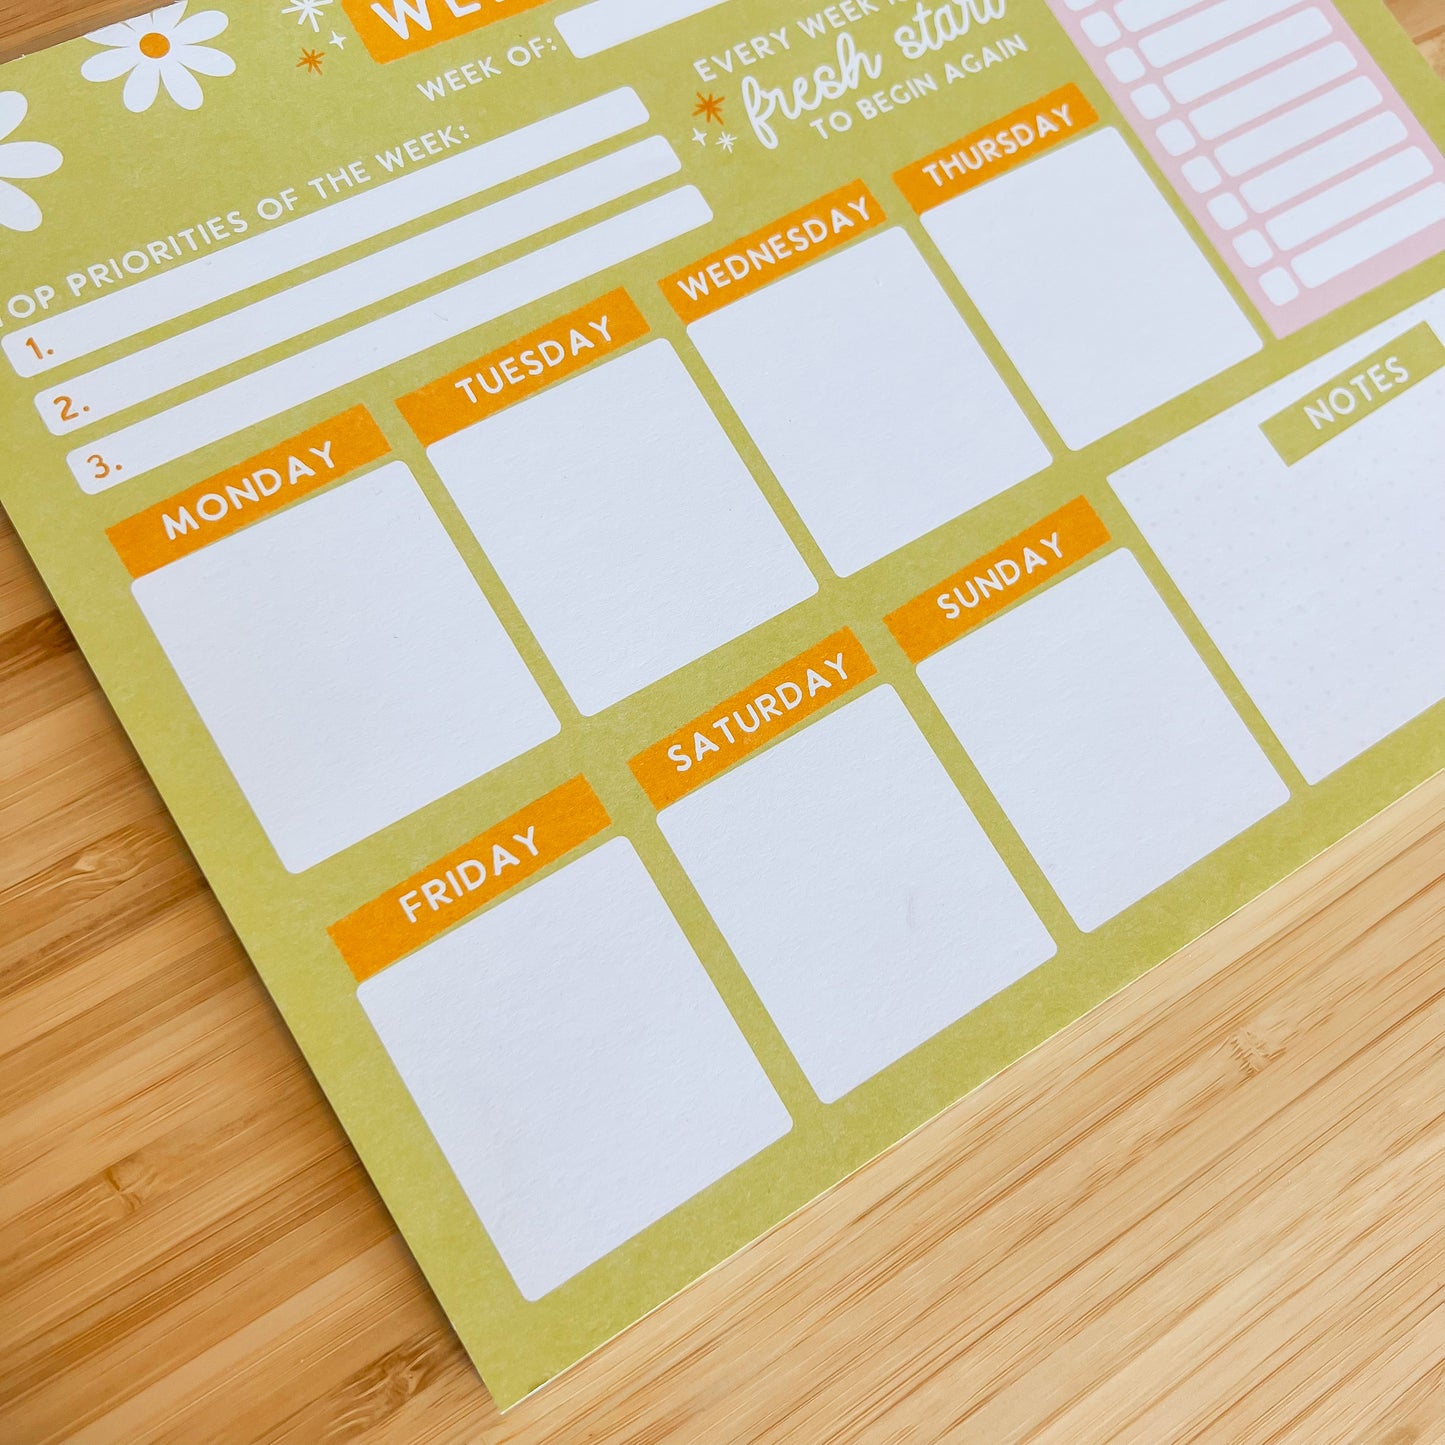 Green Daisy Weekly Plan Notepad